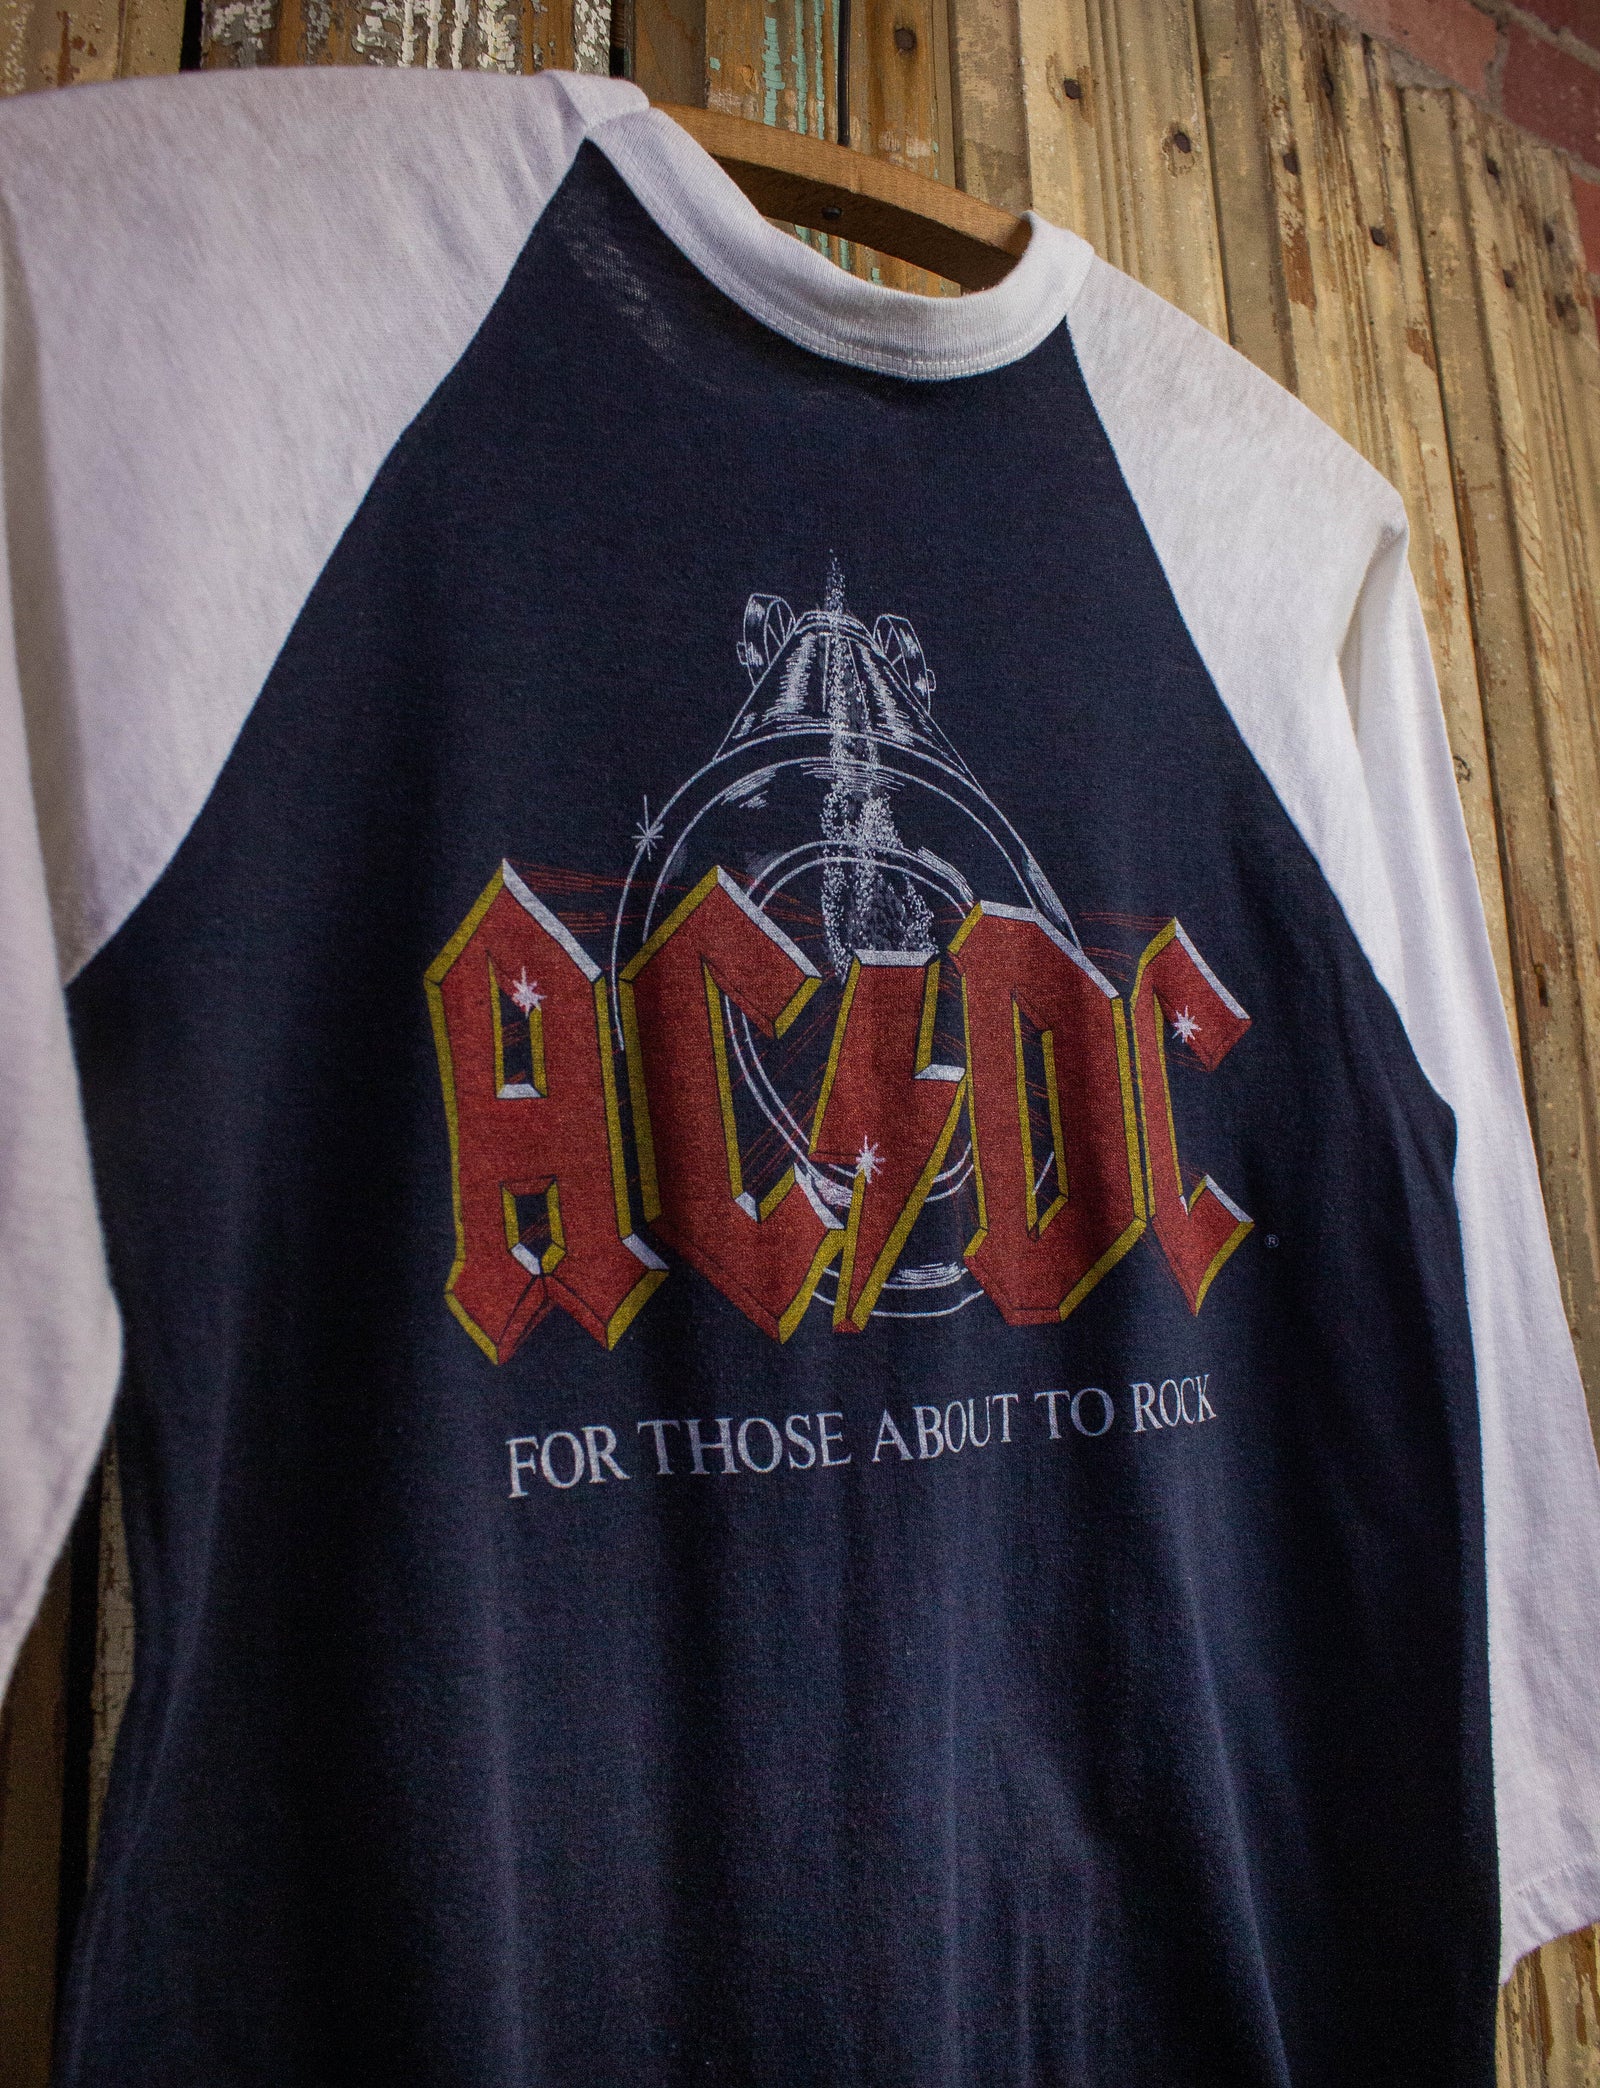 Vintage AC/DC For Those About To Rock Raglan Concert T Shirt 1981 Black/White XS